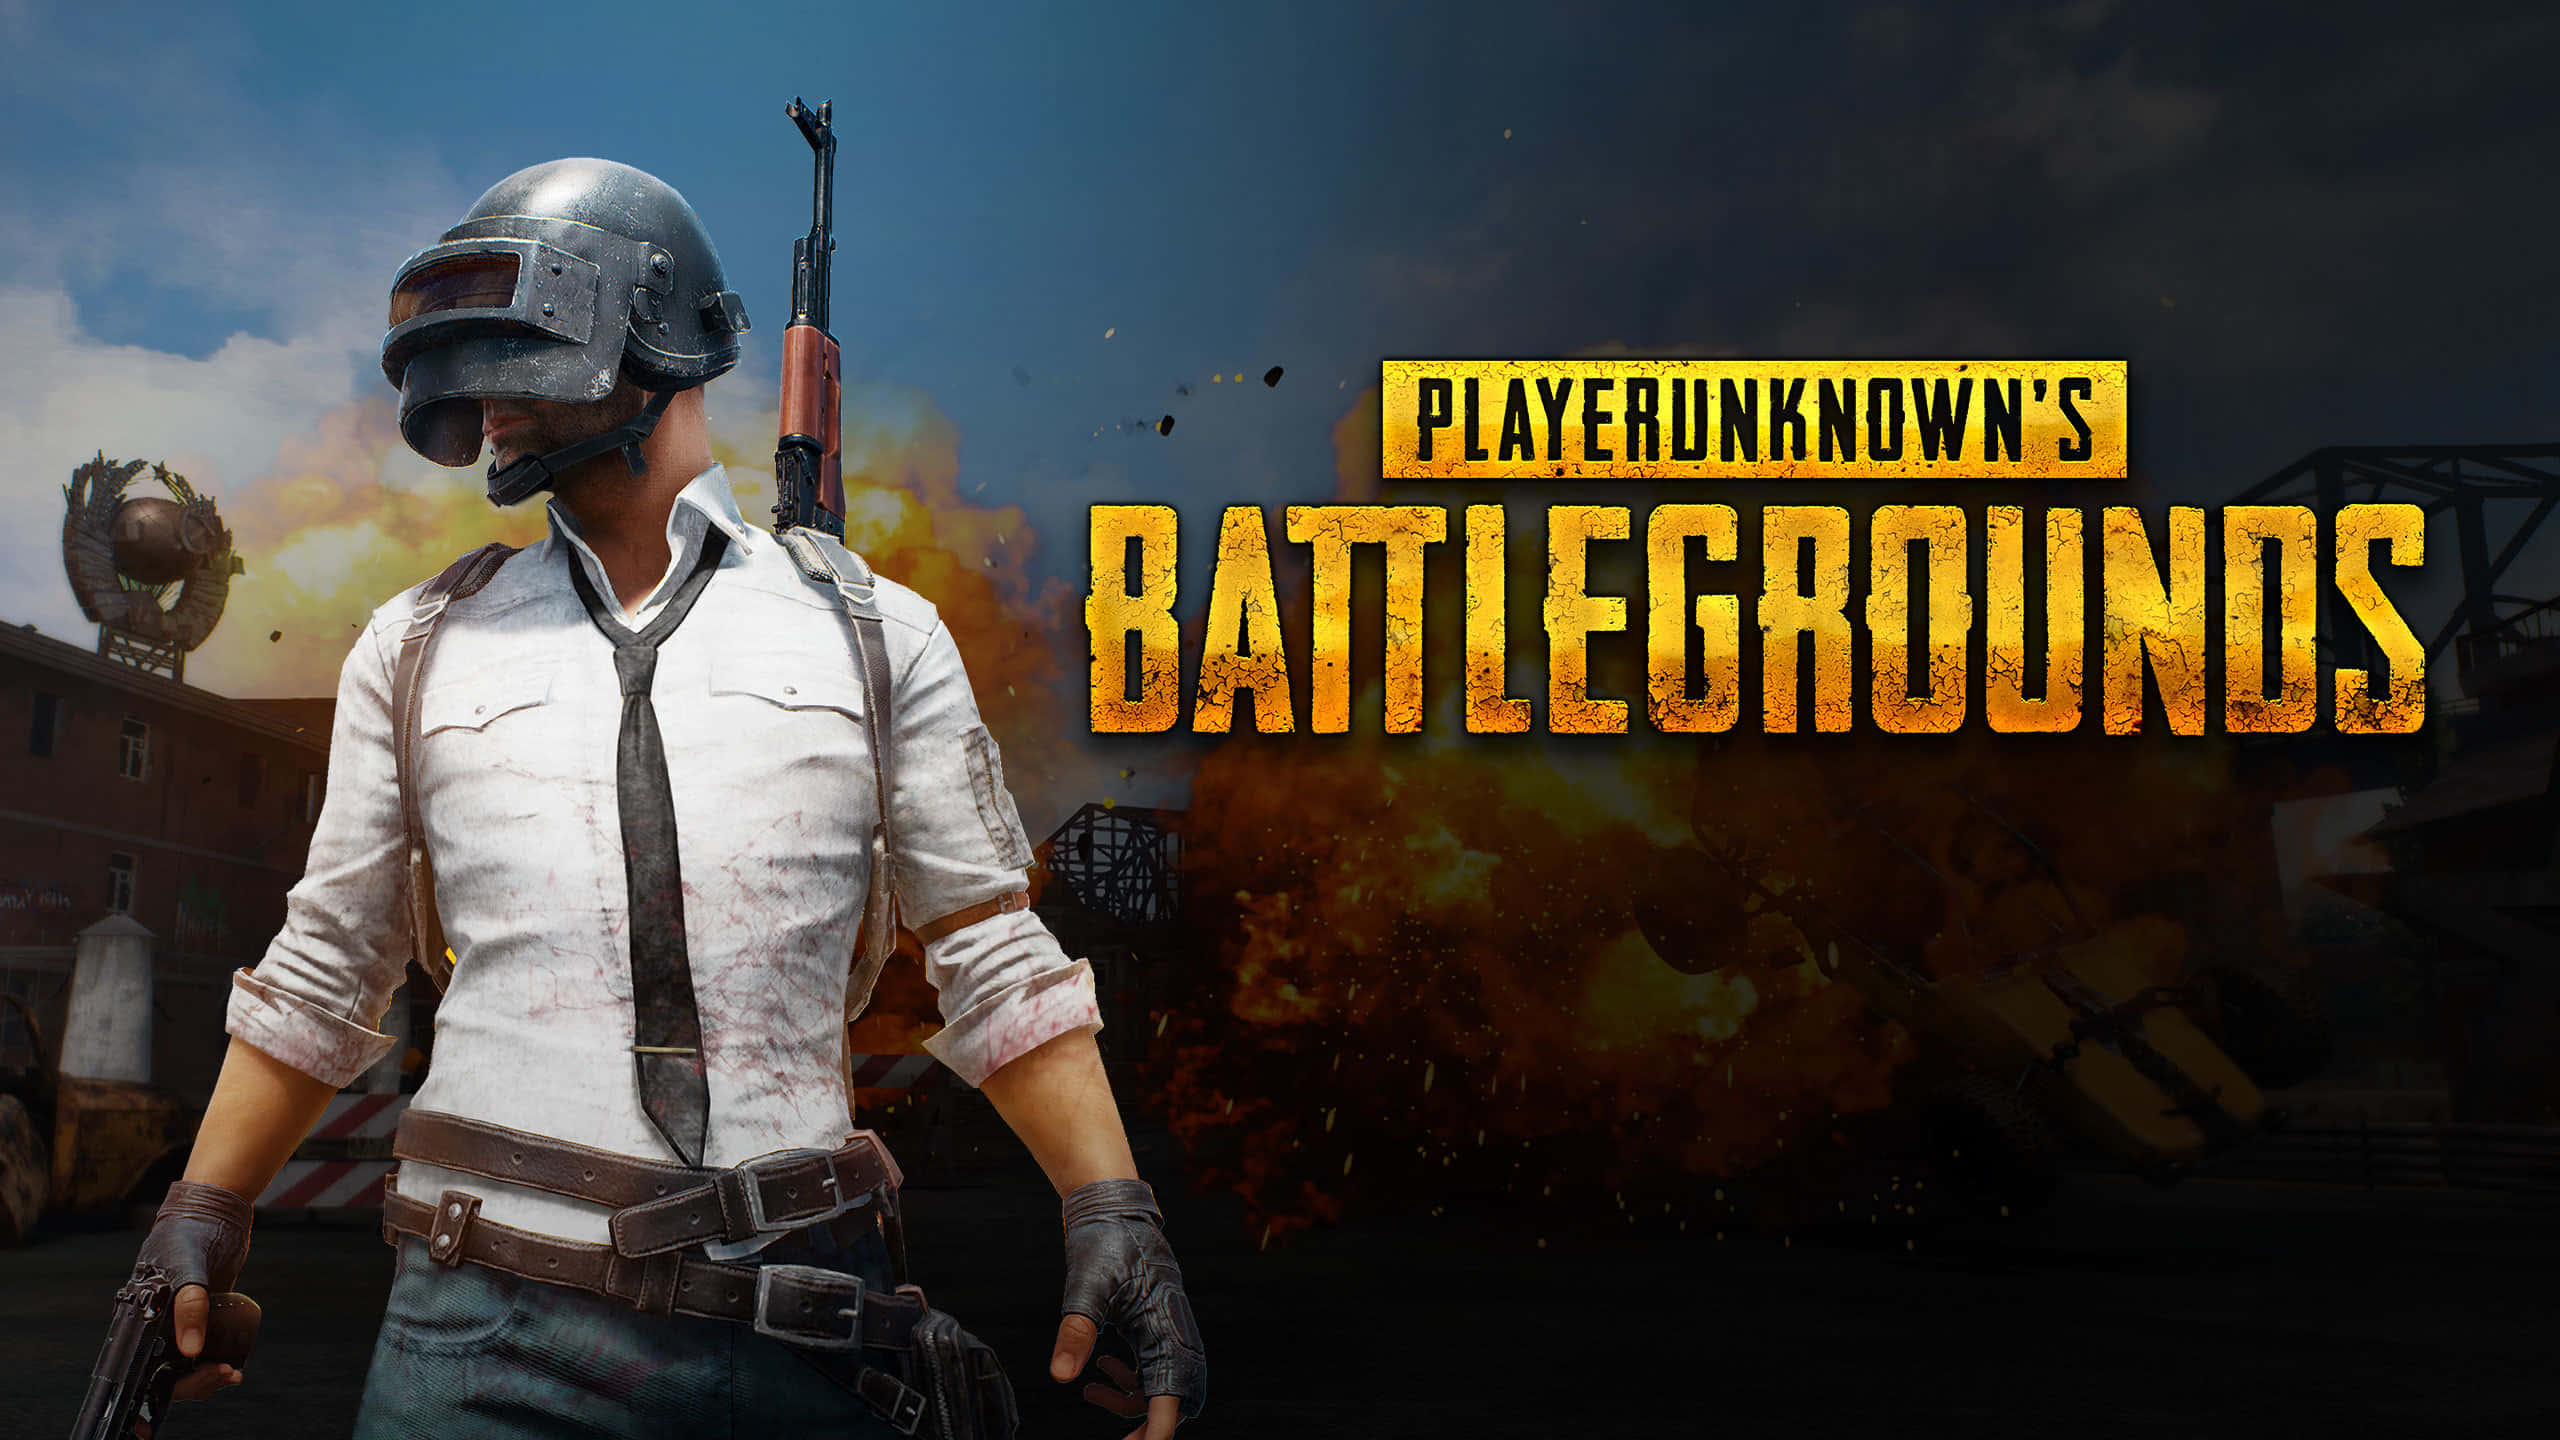 Prepare For Survival In Playerunknown's Battlegrounds